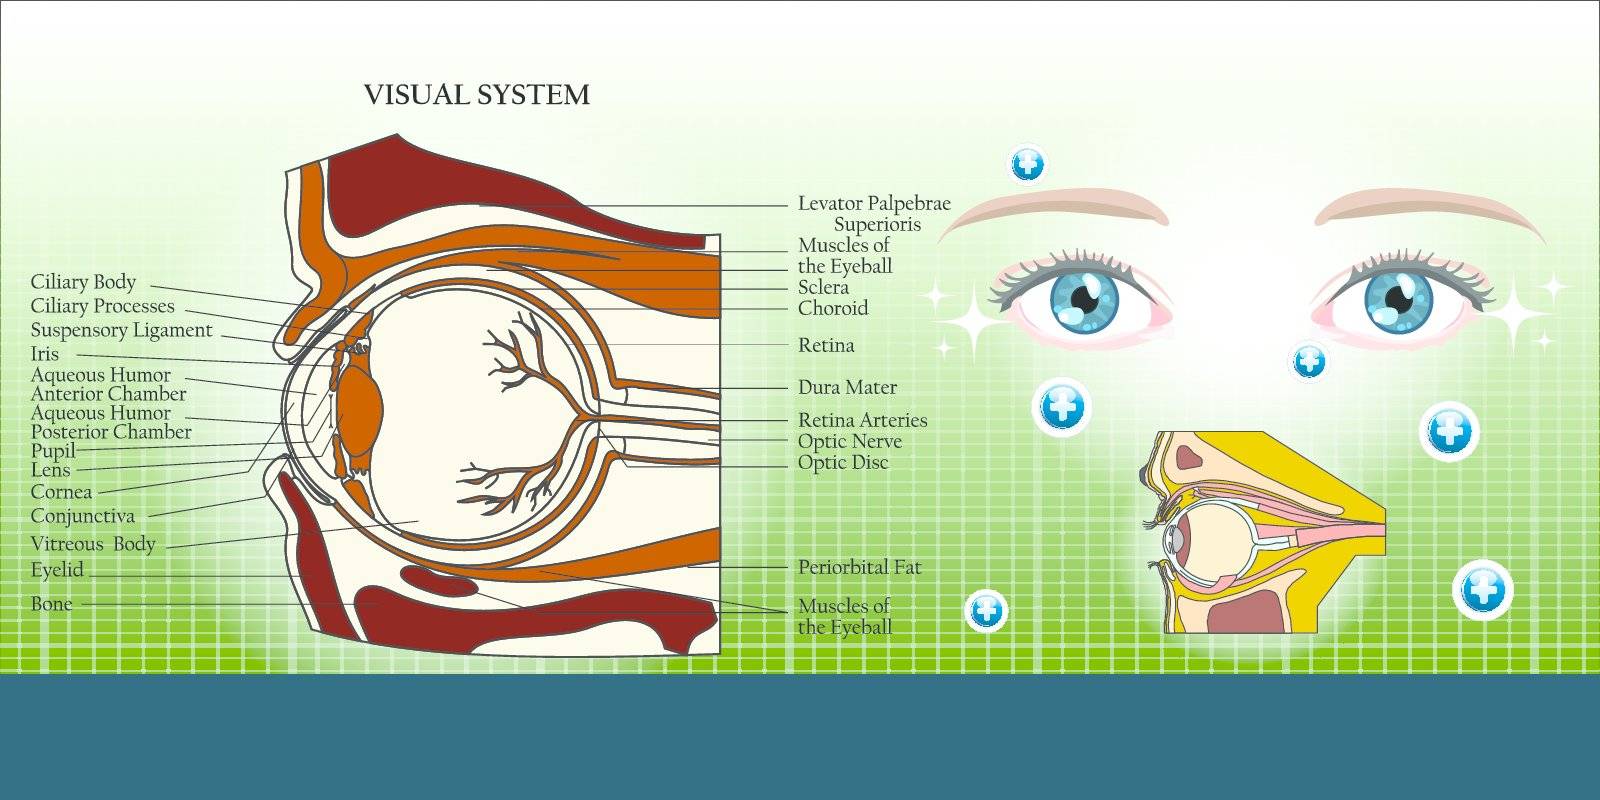 Visual system and eye anatomy illustration background